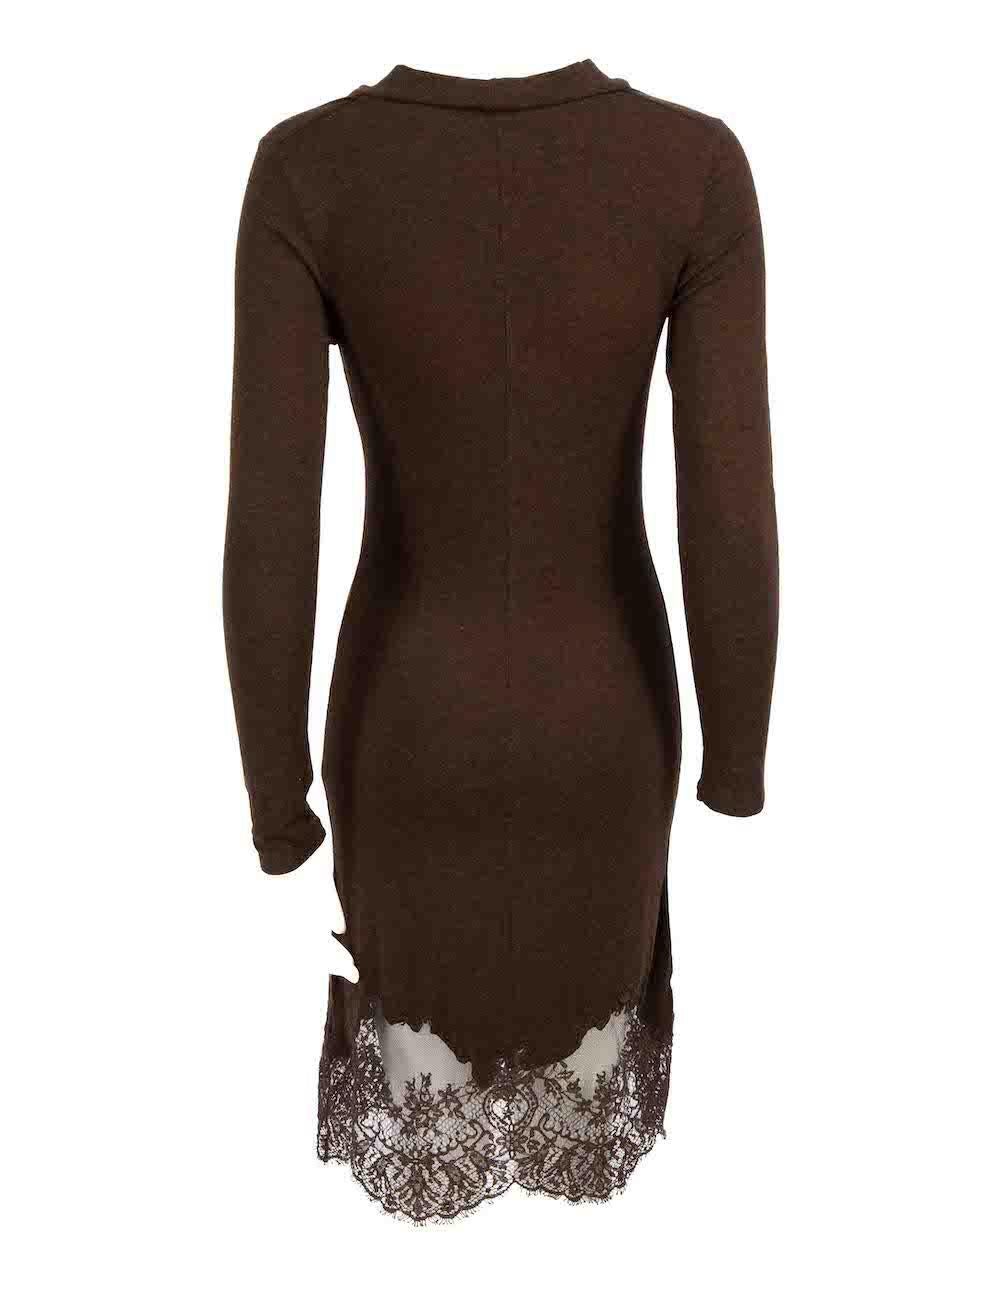 Valentino Red Valentino Brown Knit Cowl Neck Midi Dress Size M In Good Condition For Sale In London, GB